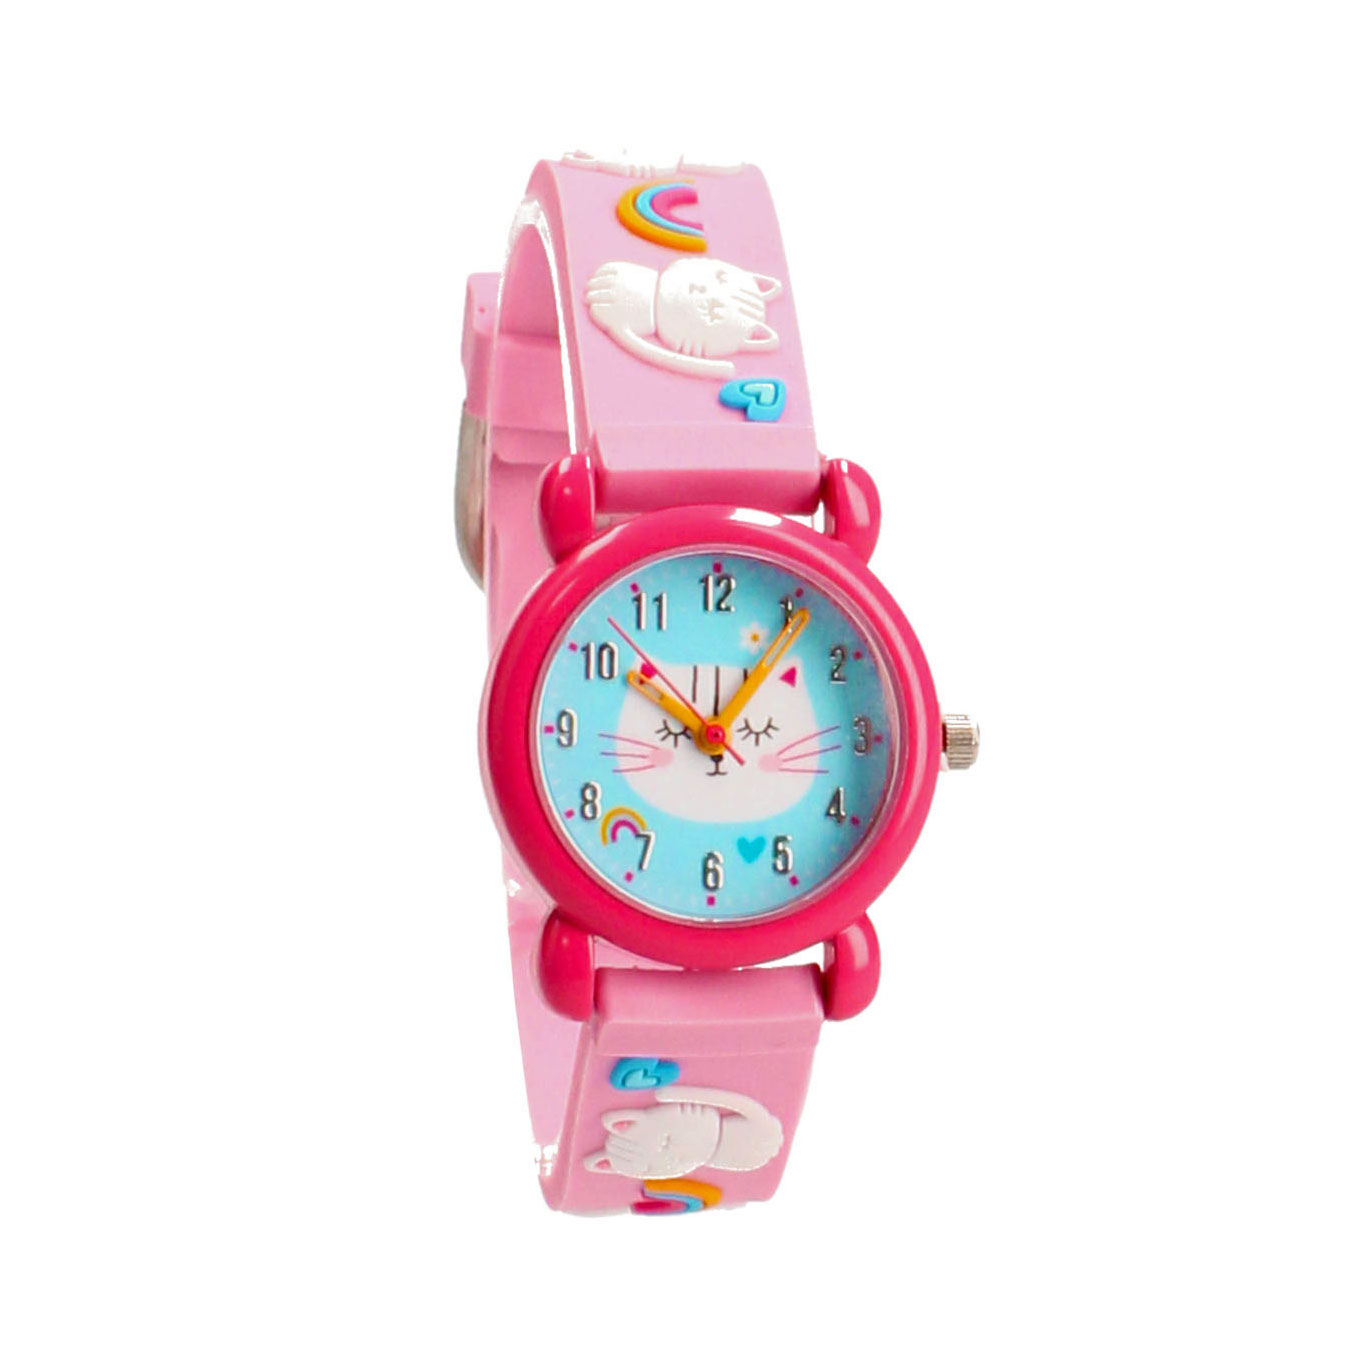 Horloge Pret Happy Times - Roze